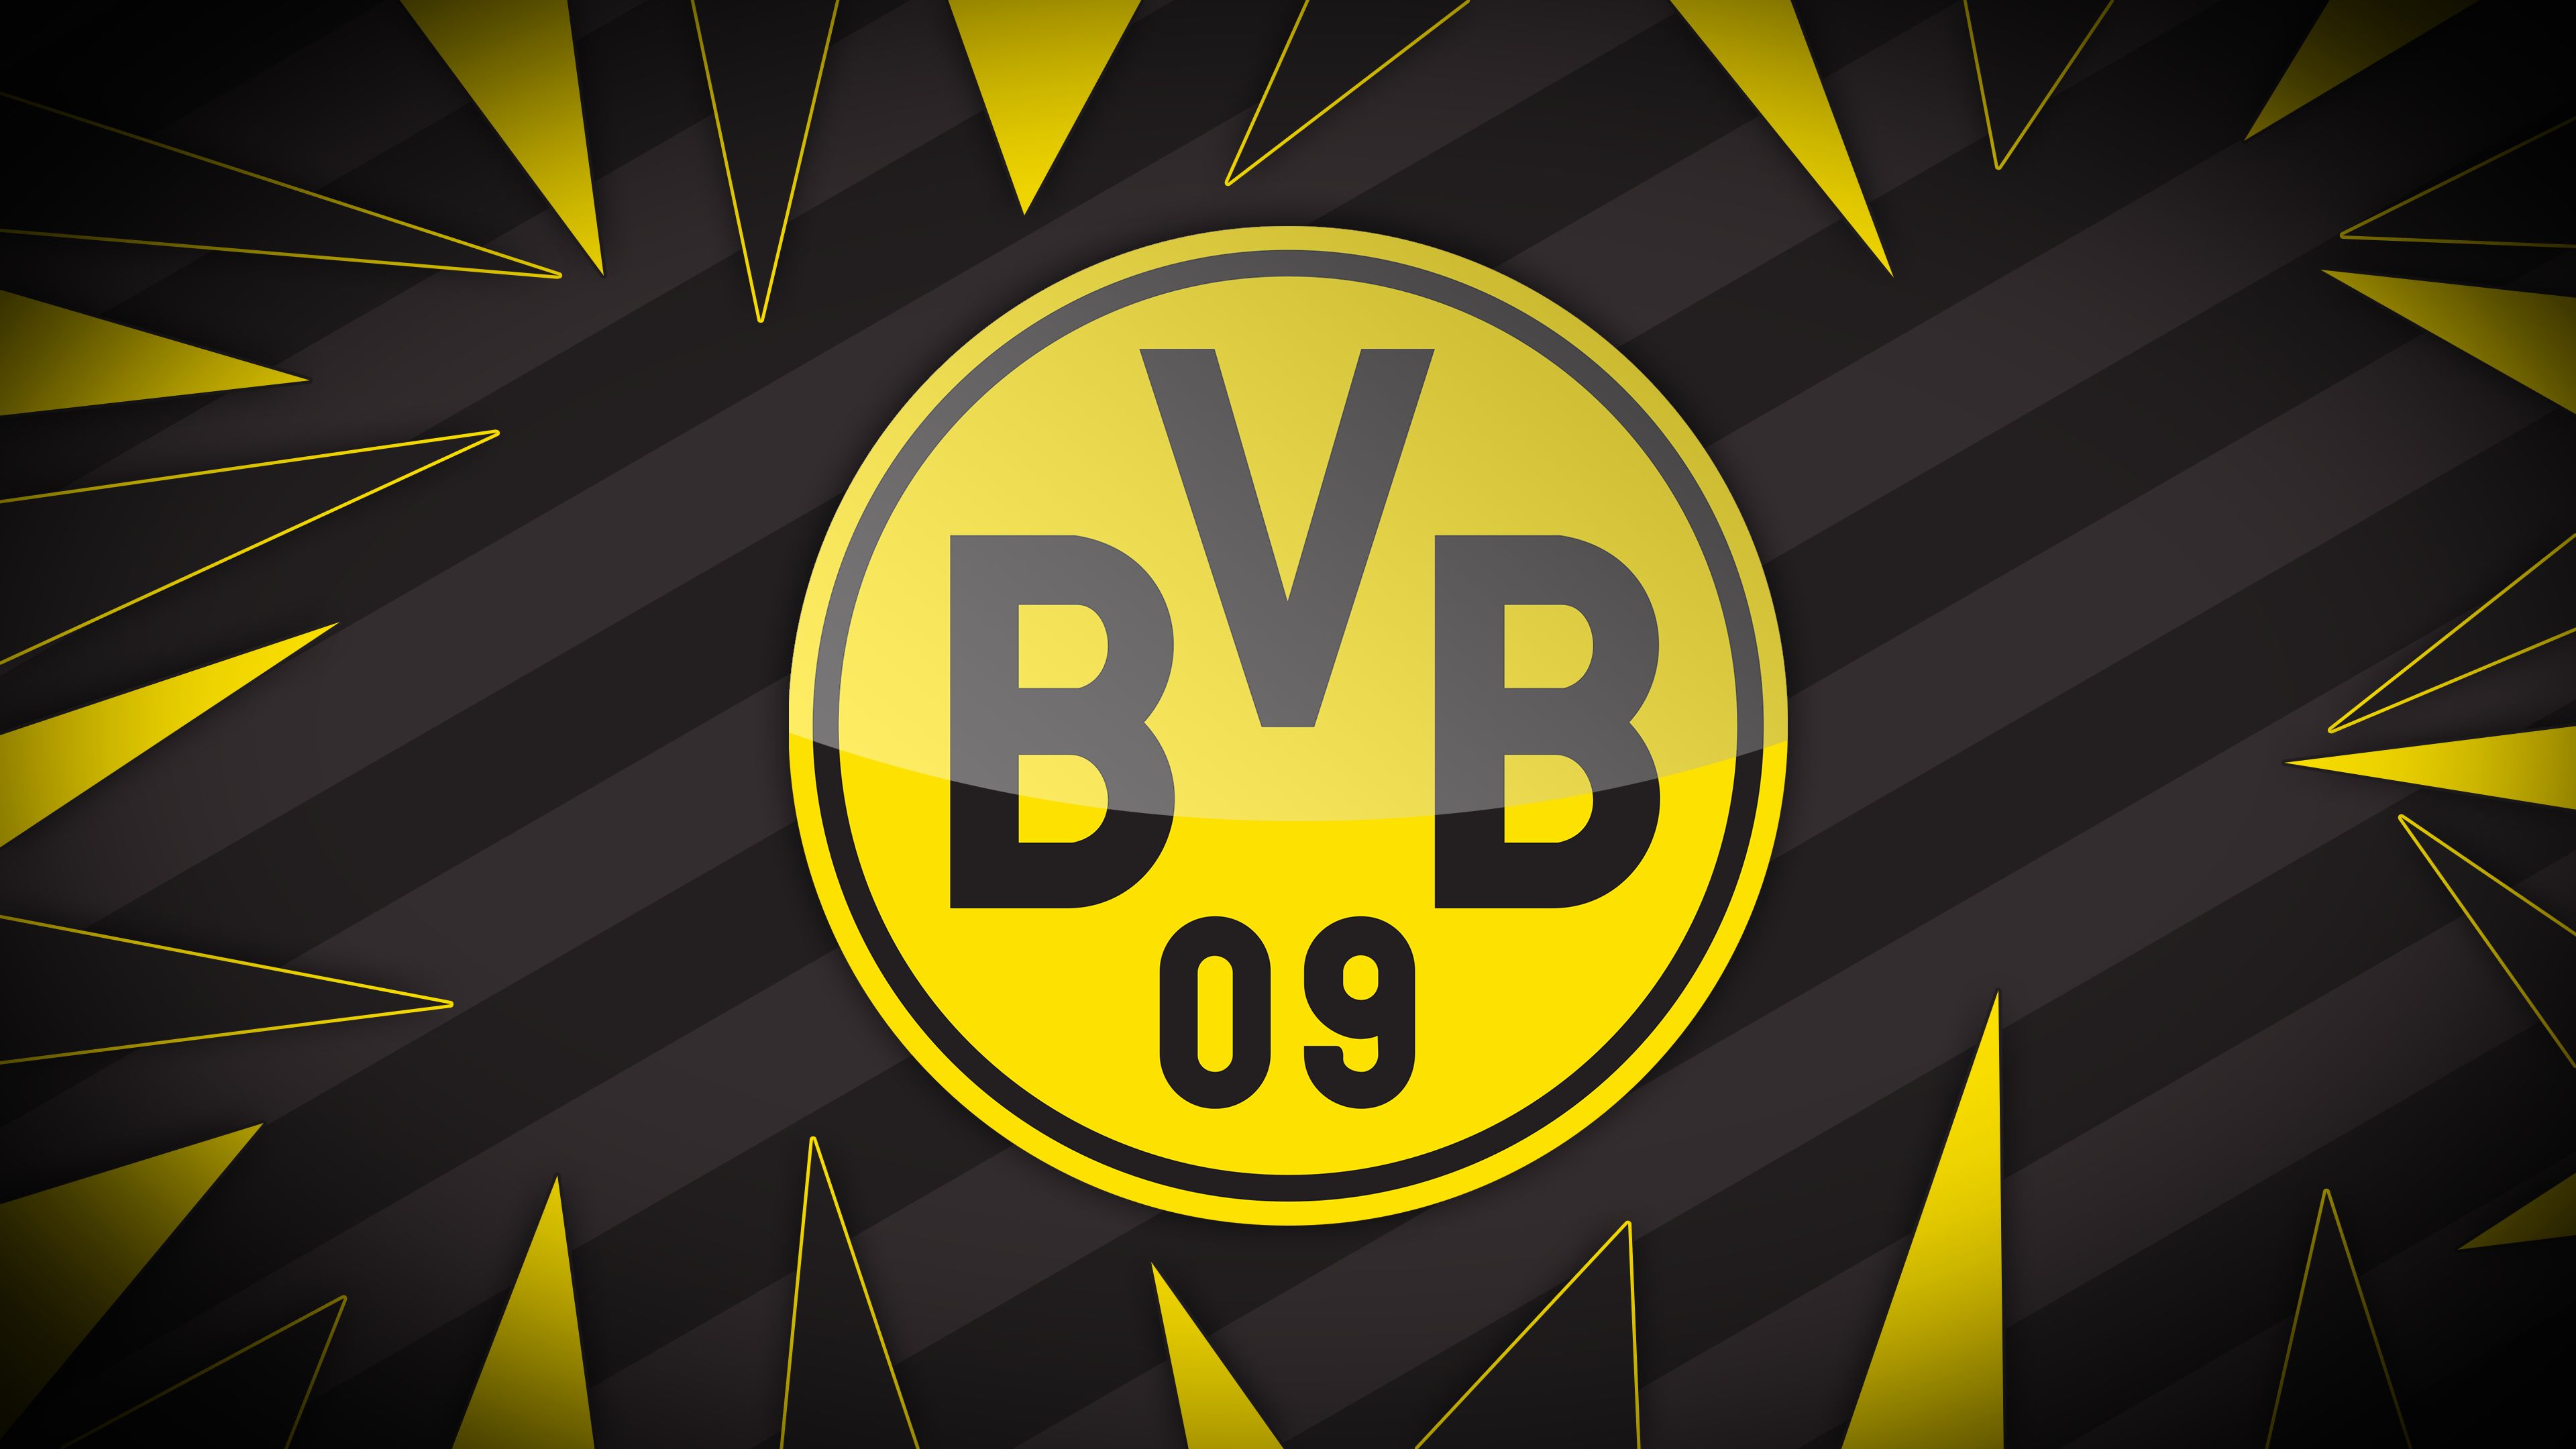 bvb, borussia dortmund, sports, emblem, logo, soccer